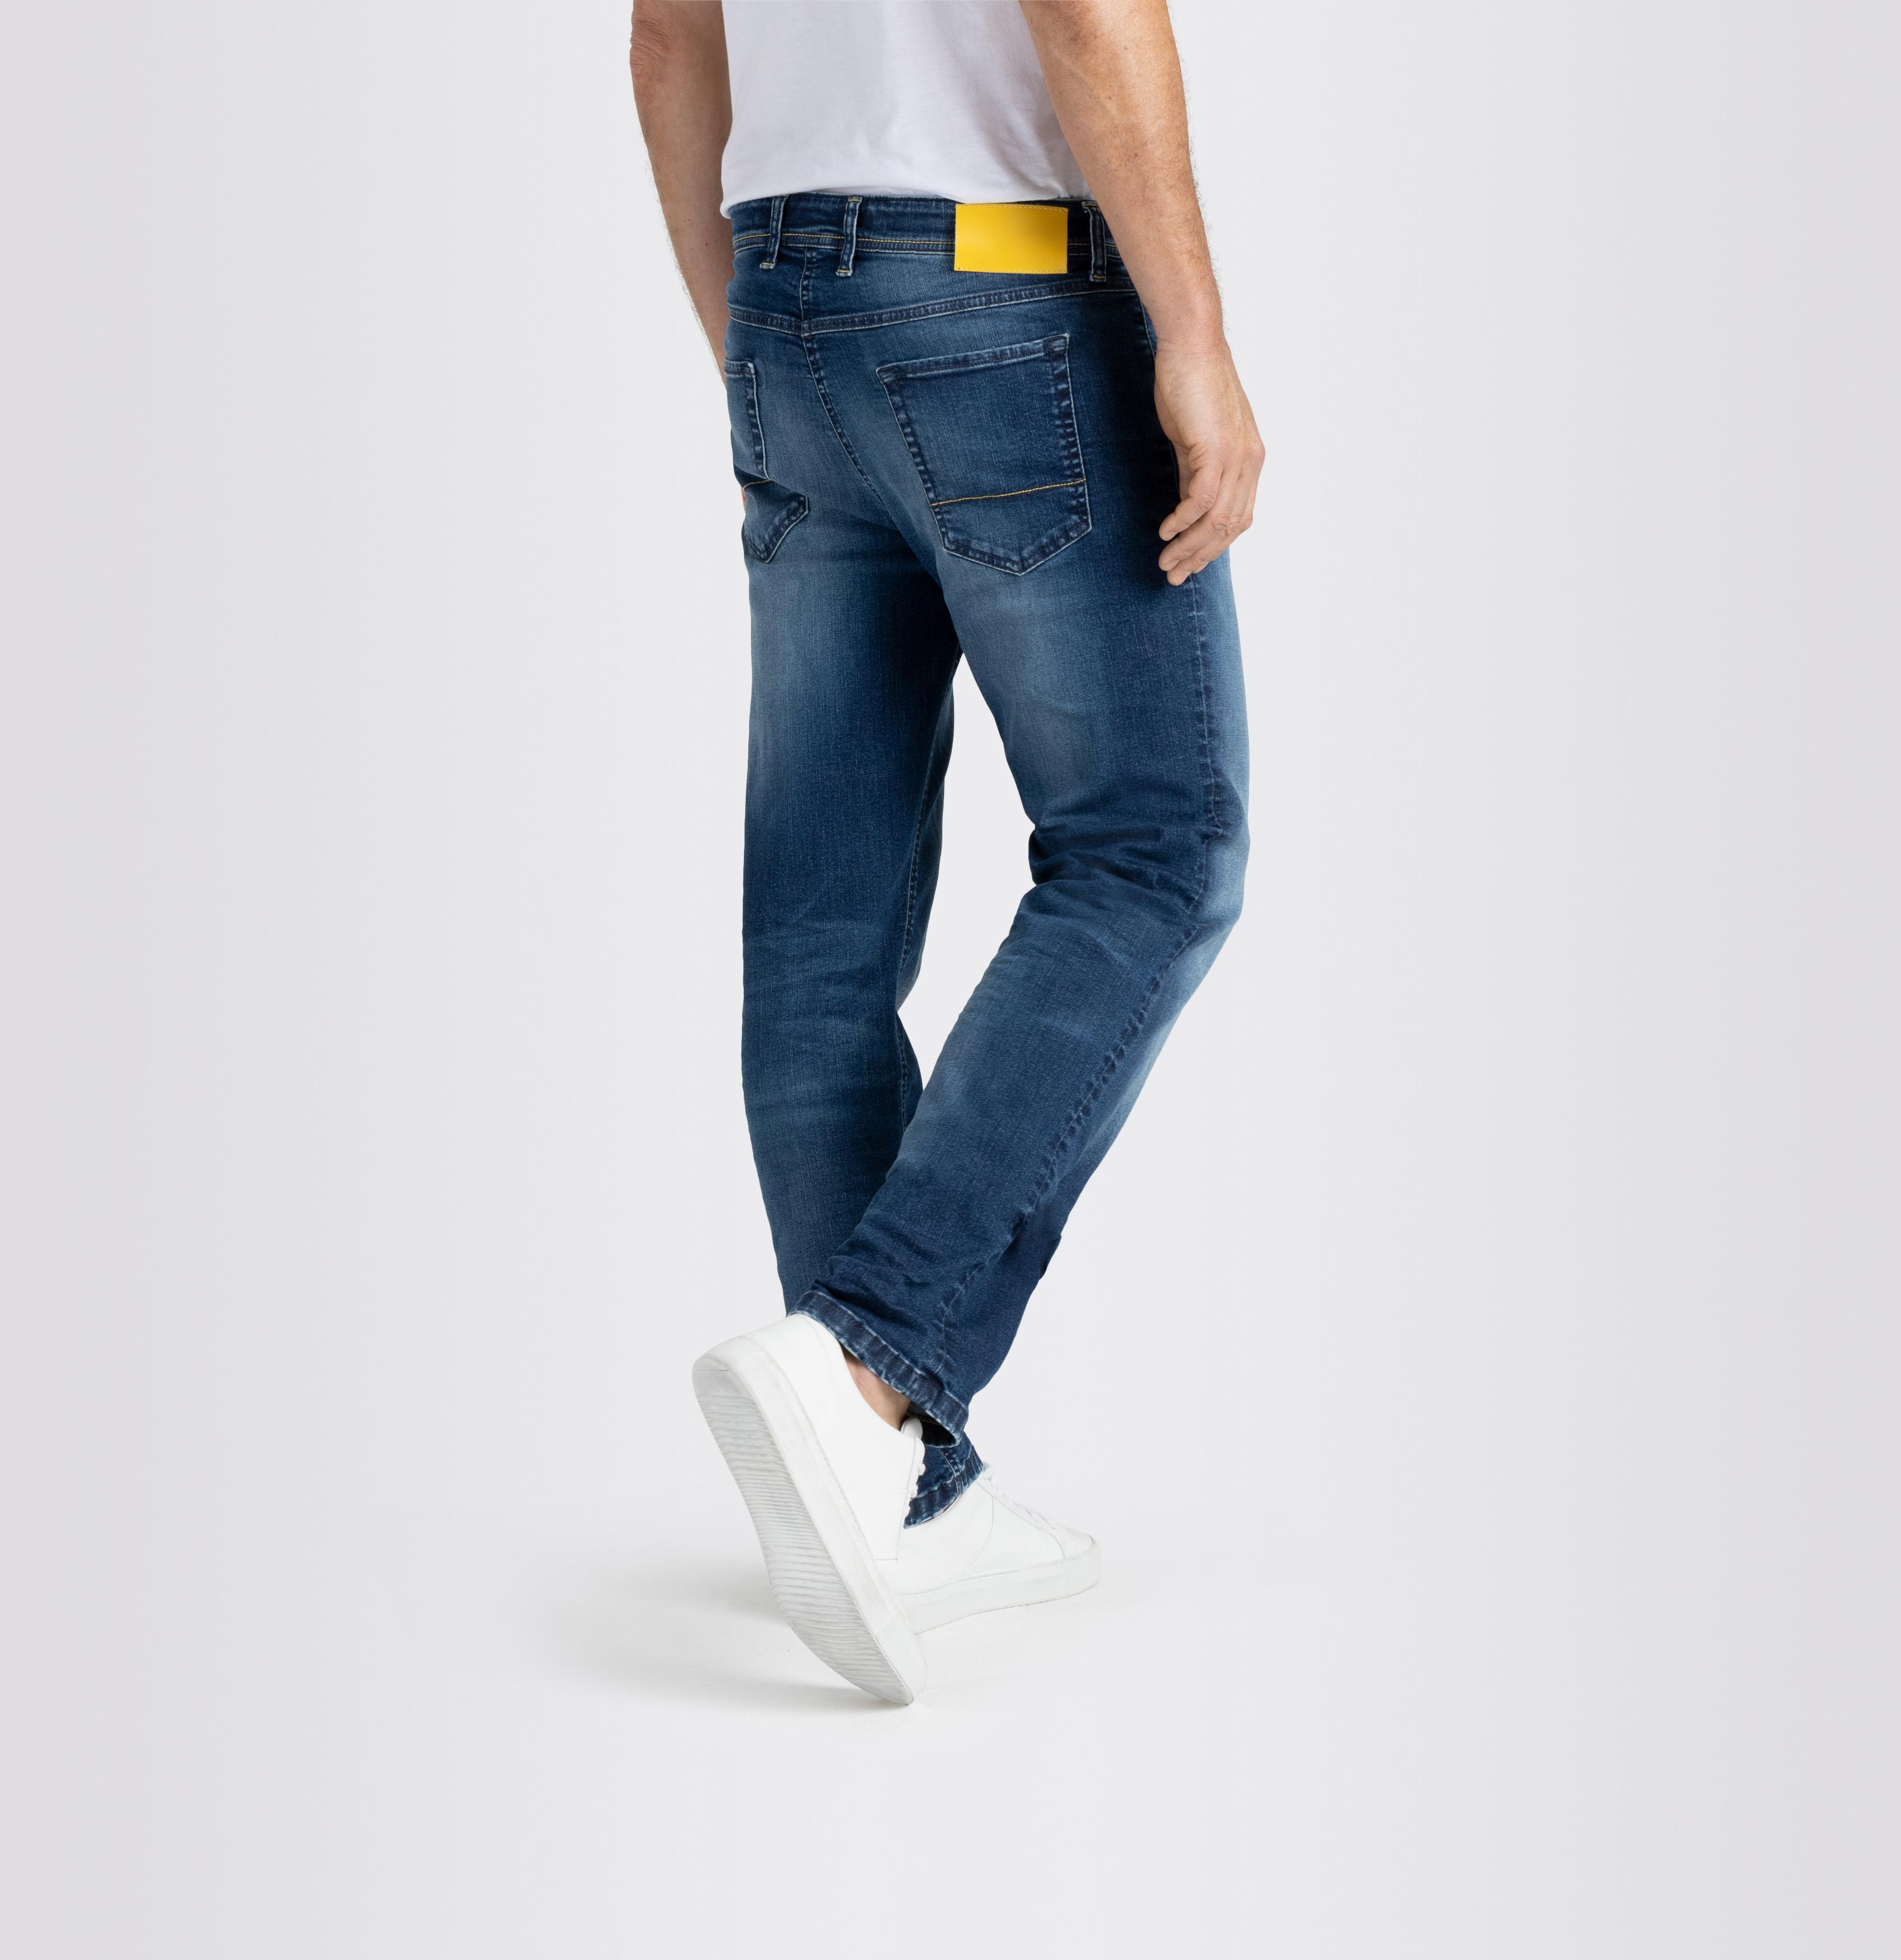 Shop FI MAC Macflexx, | Jeans H552 Macflexx, - Men Pants, blue